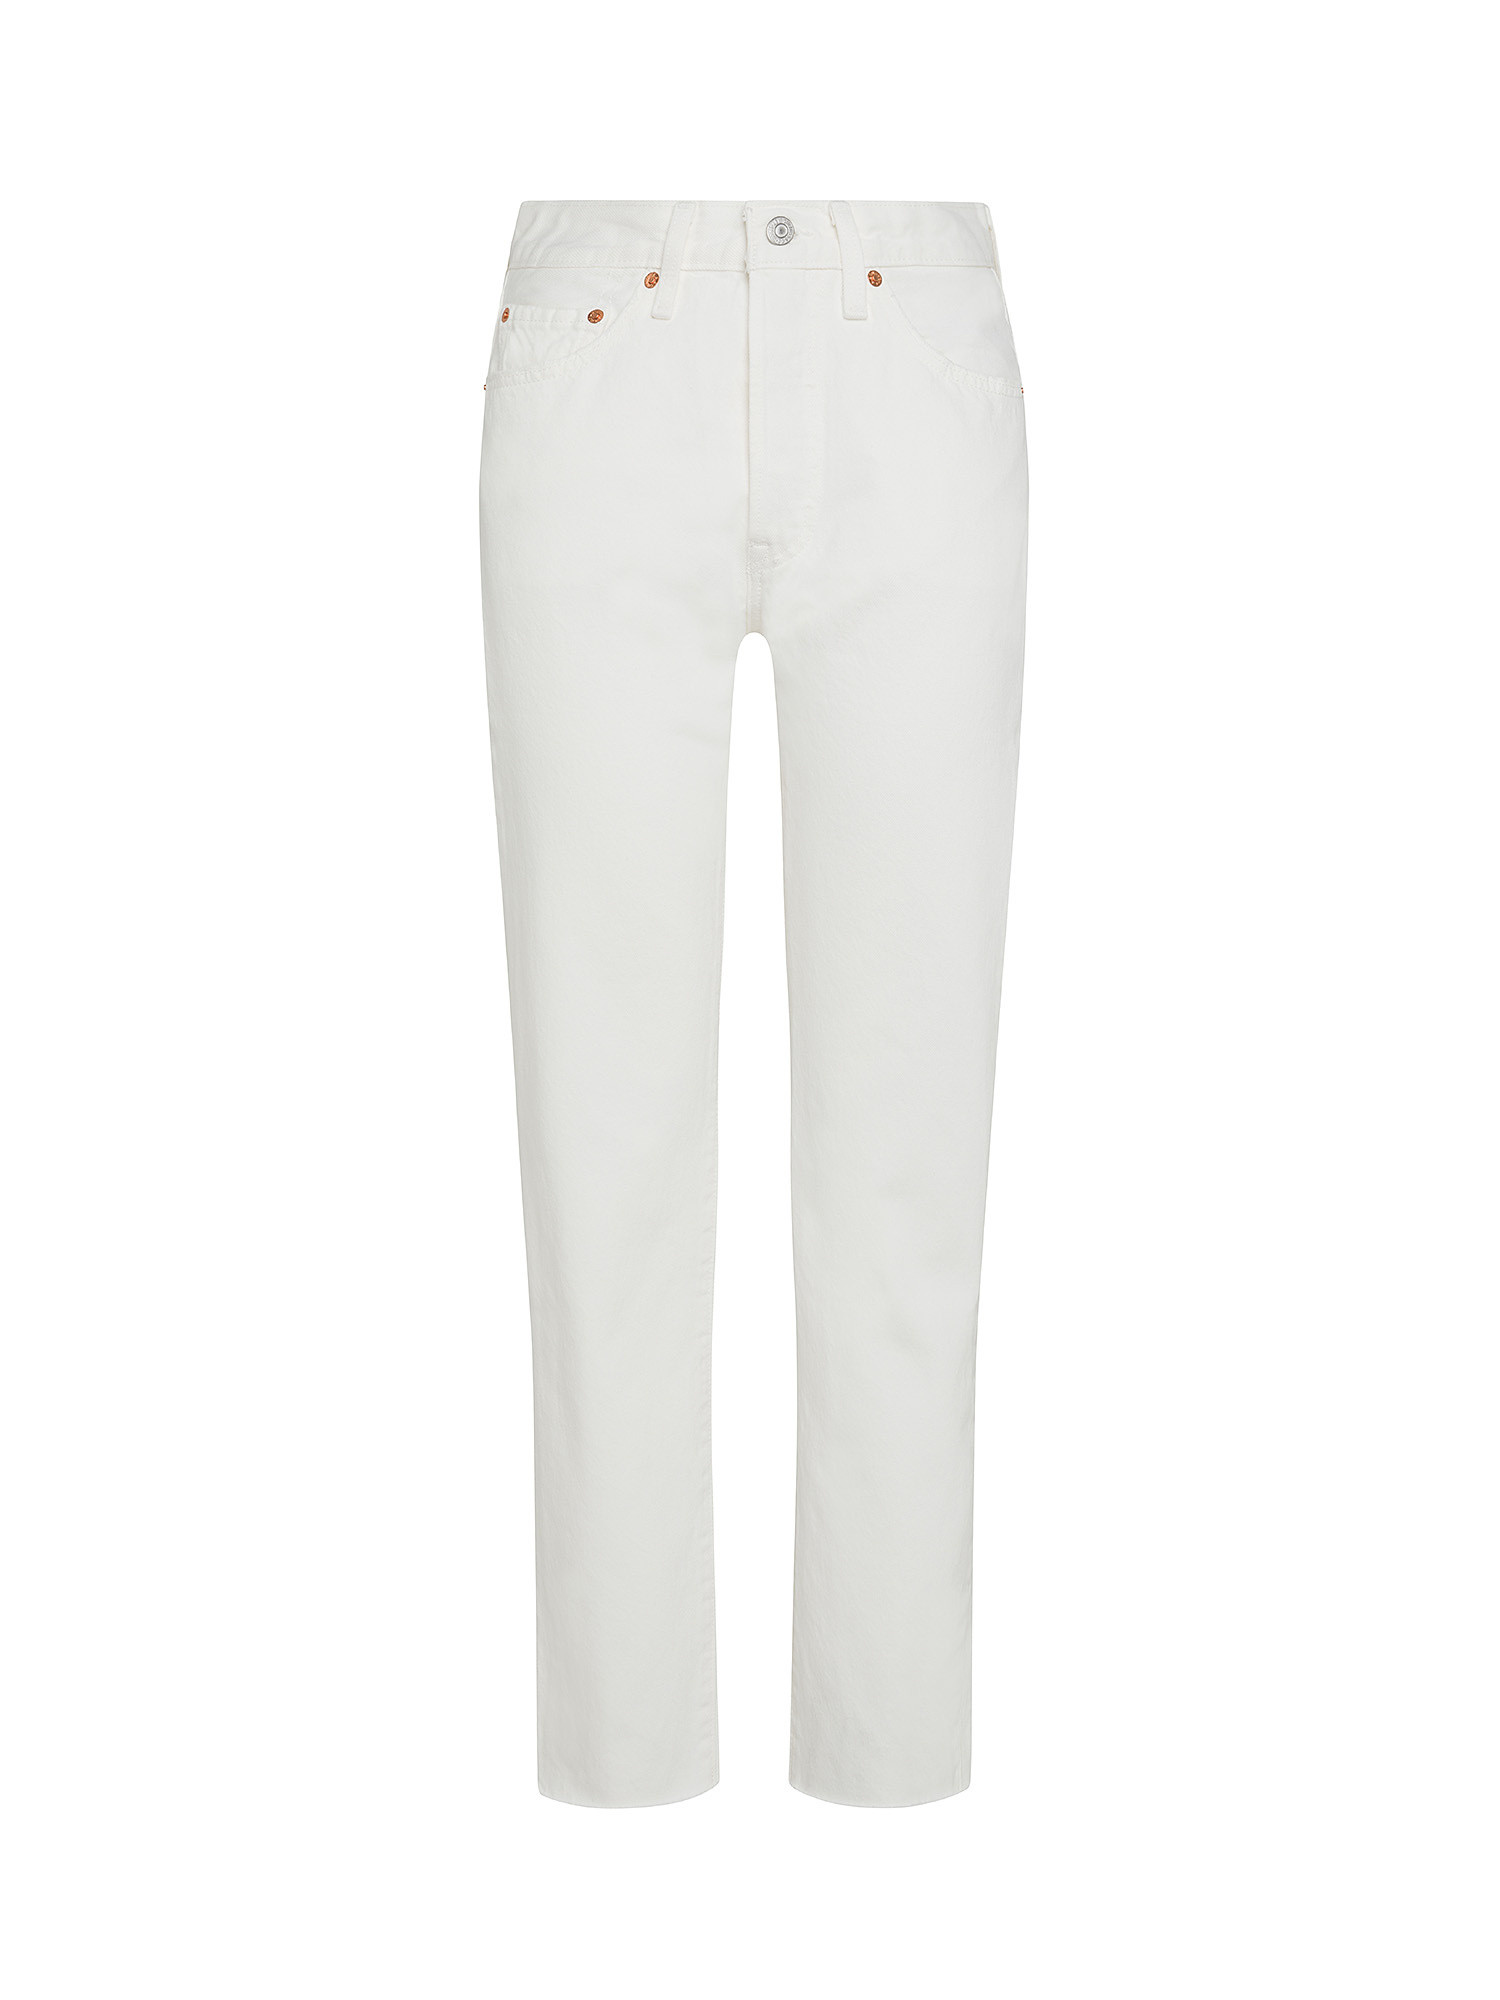 Levi's - original 501® jeans, White, large image number 0